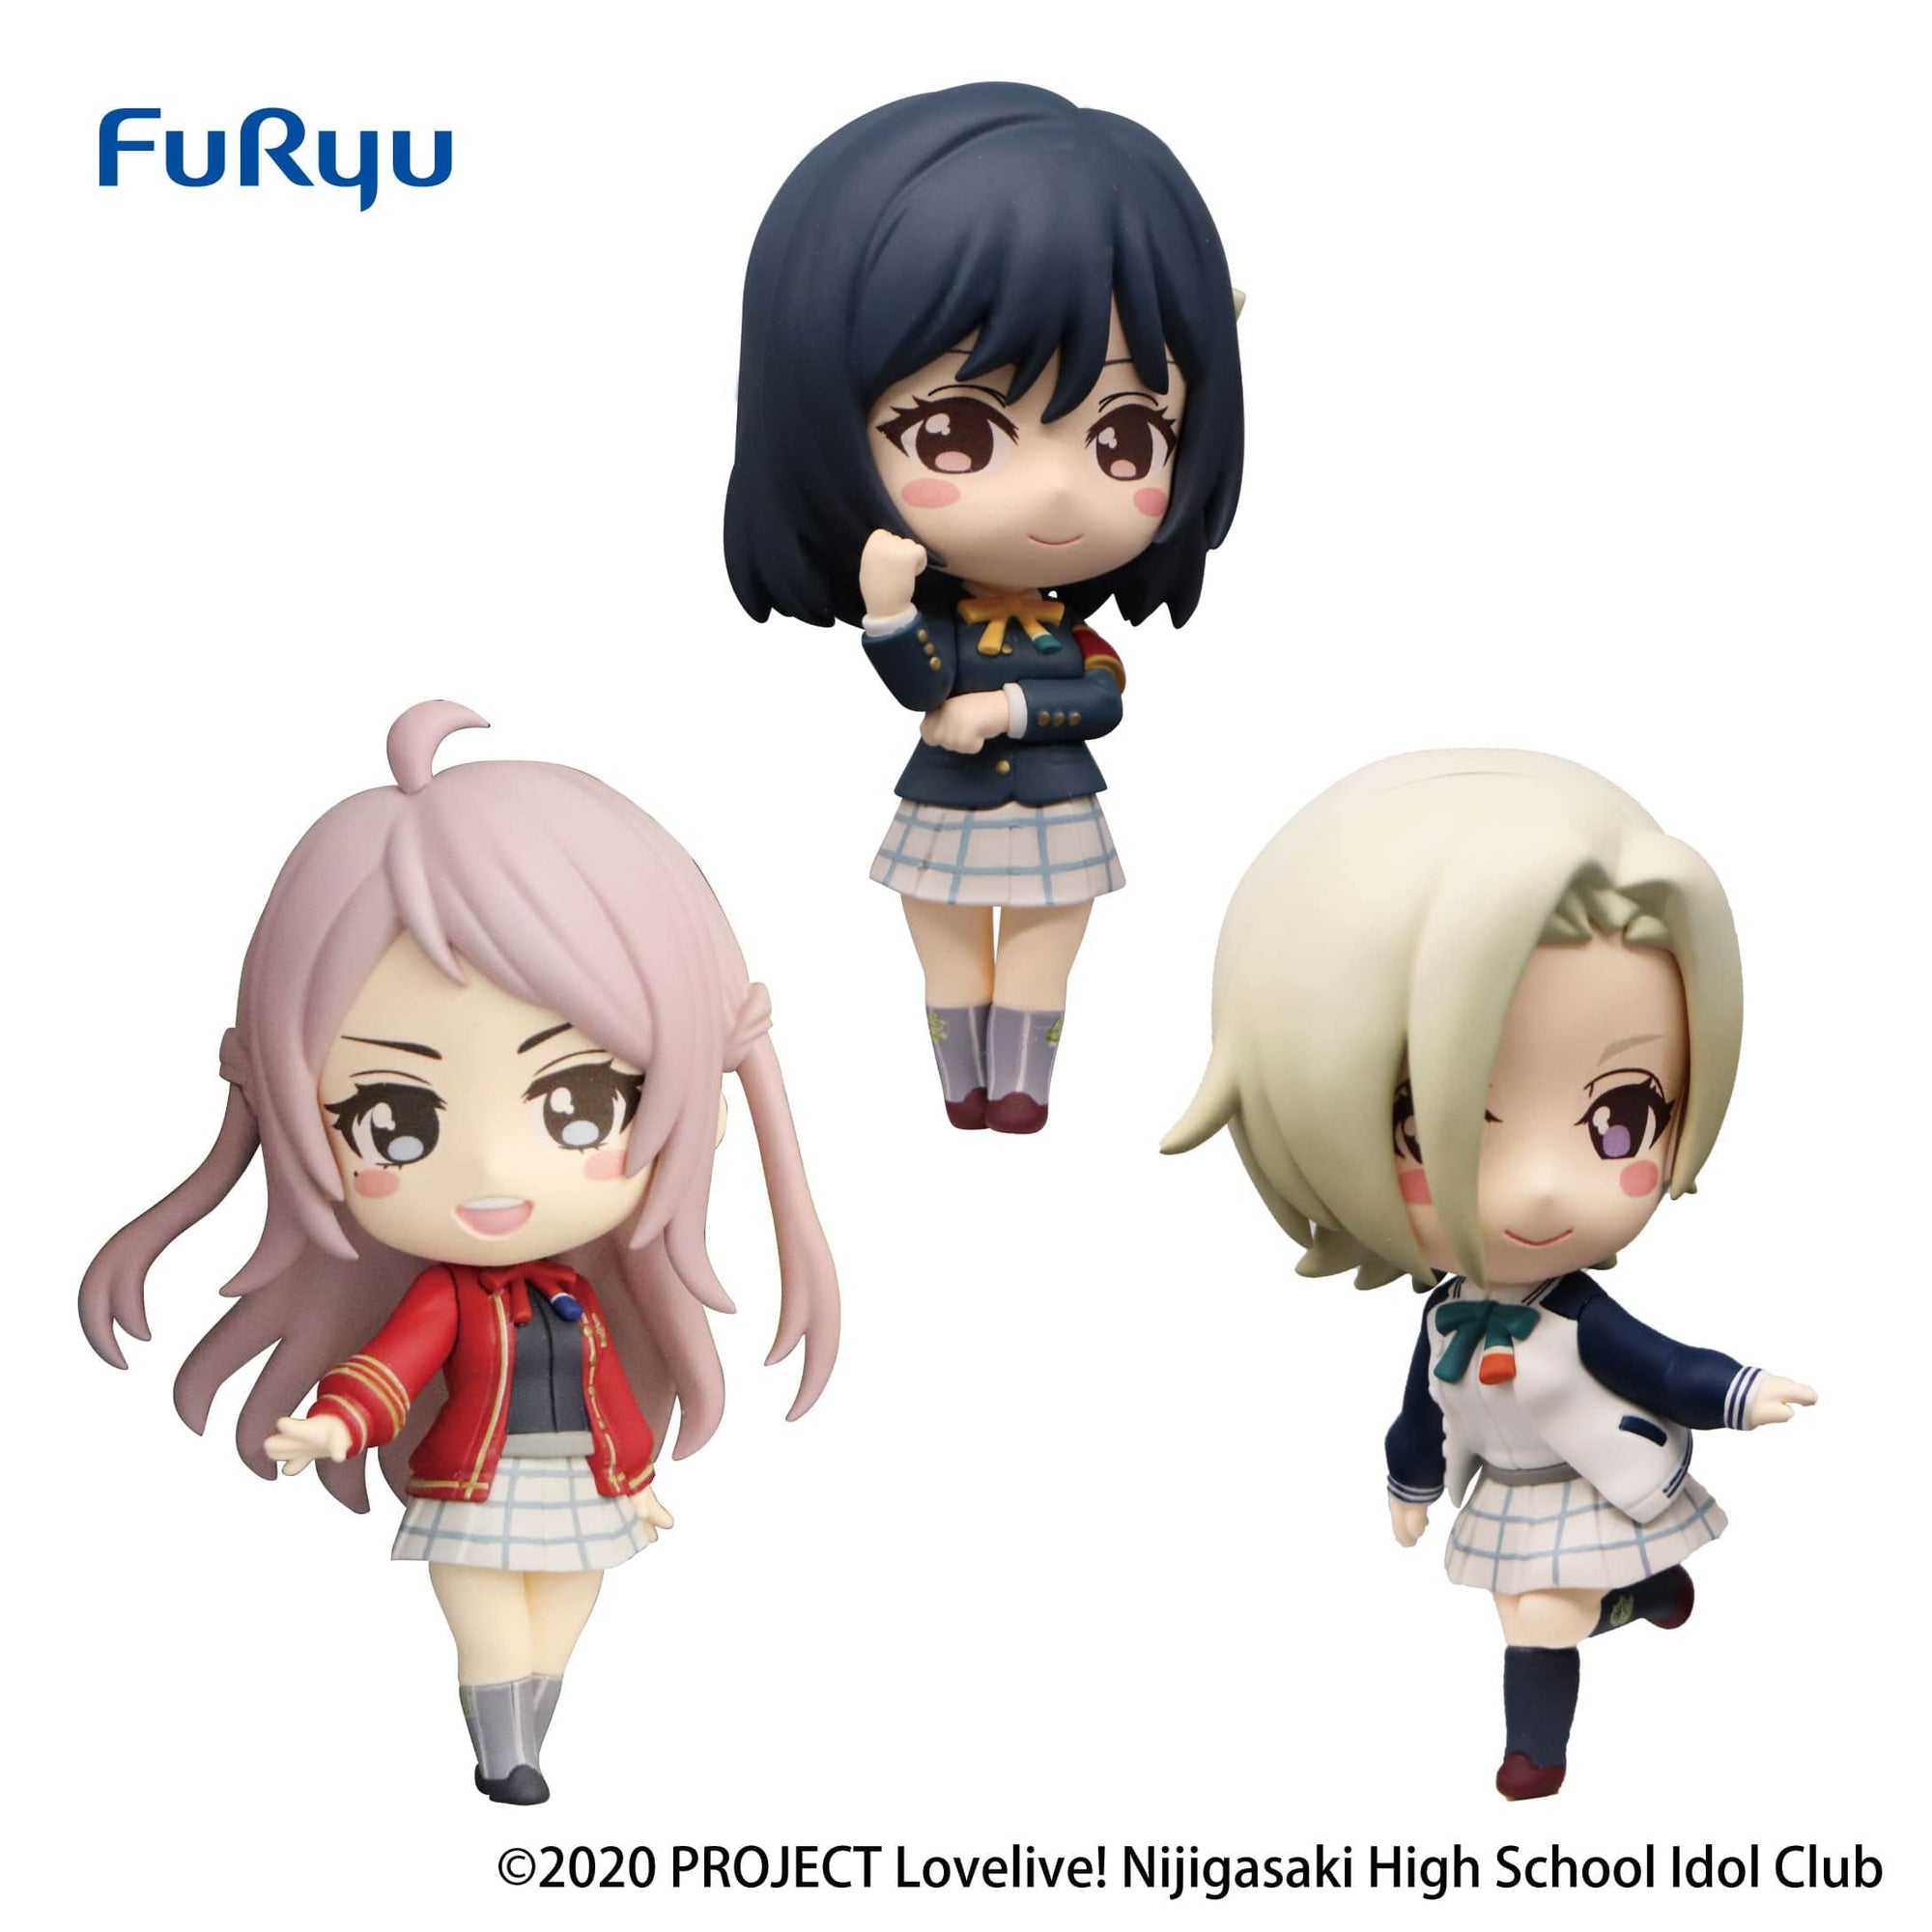 FURYU FURYU Corporation Love Live! Nijigasaki High School Idol Club Chobirume Figure set